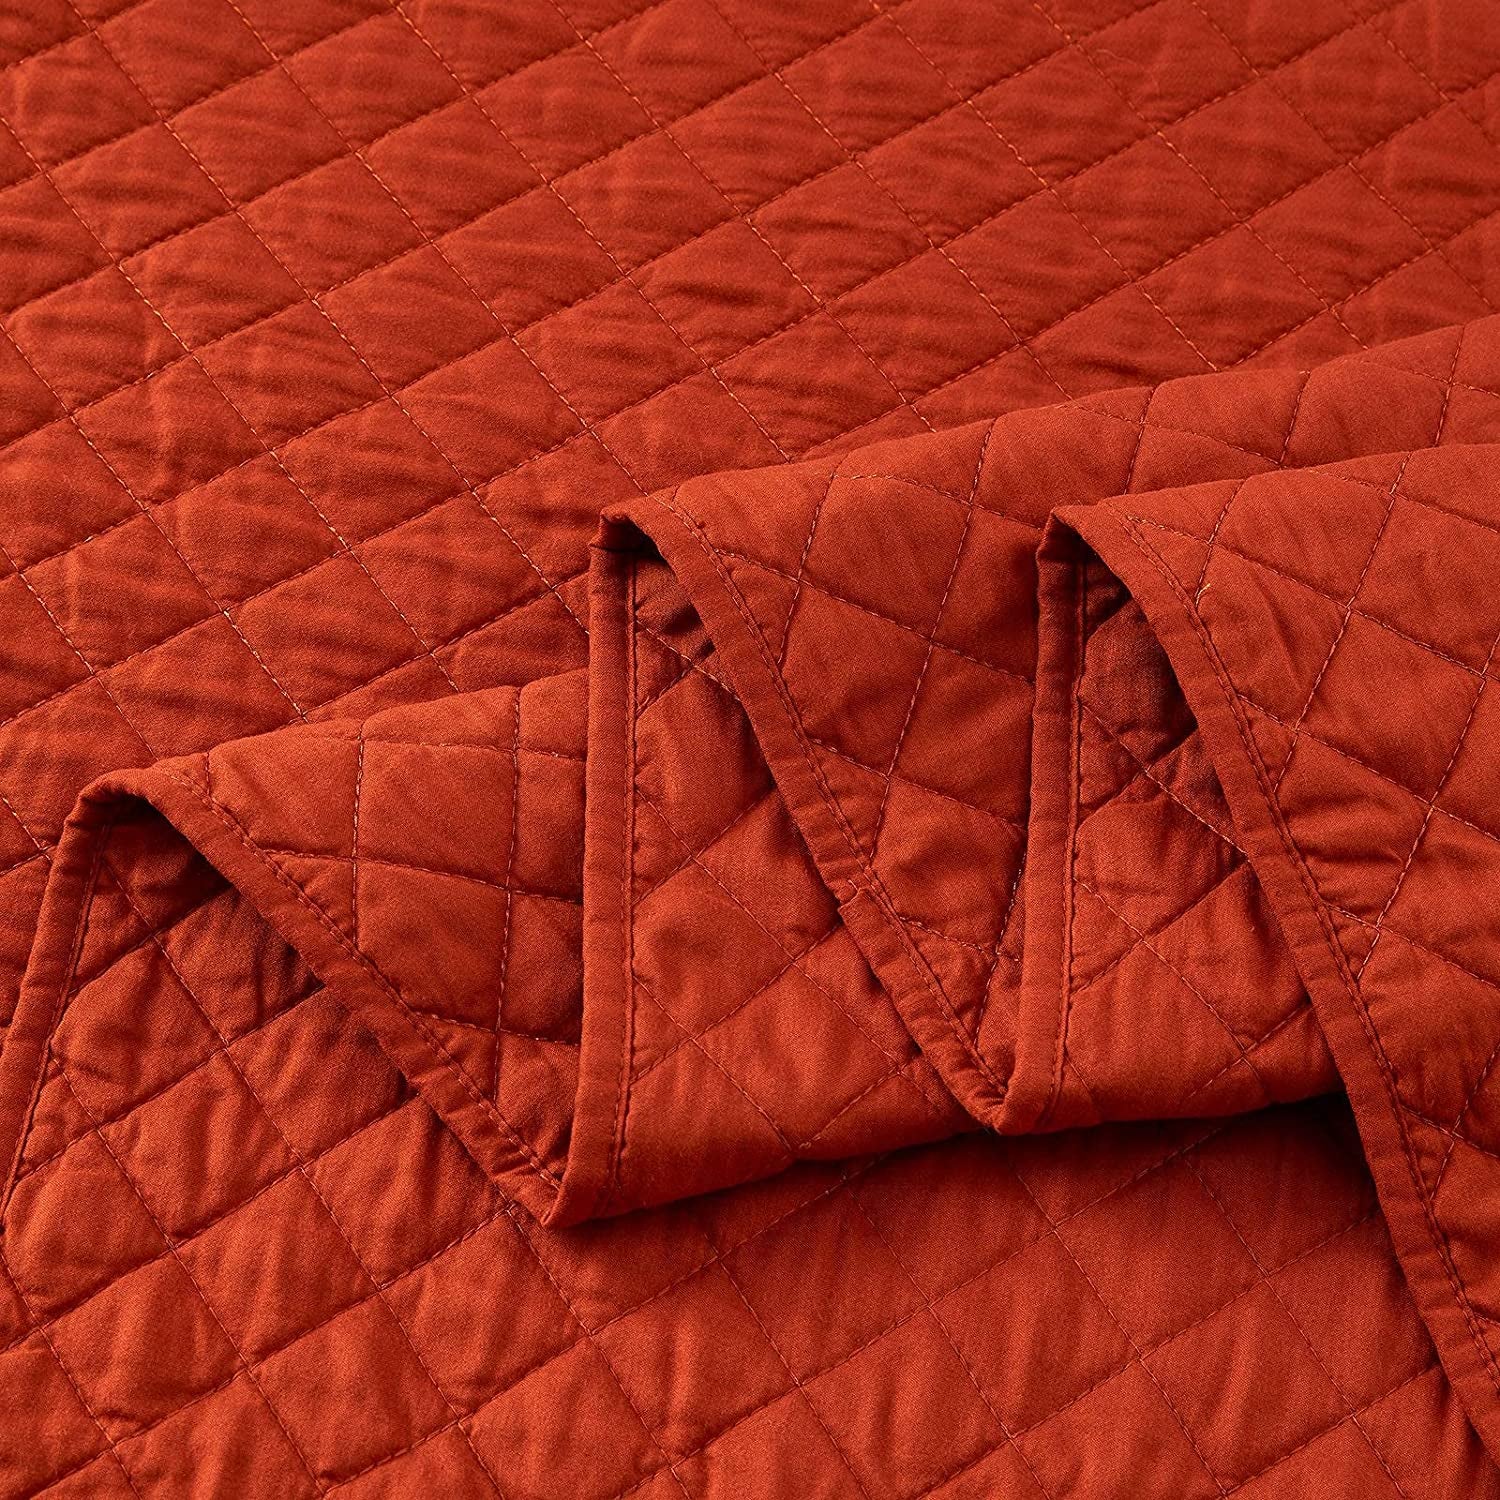 Quilt Set King Rust Lightweight Bedspread Soft Reversible Coverlet for All Season 3Pcs Burnt Orange Diamond Quilted Bedding Sets (1 Quilt 2 Pillow Shams)(106"X96")